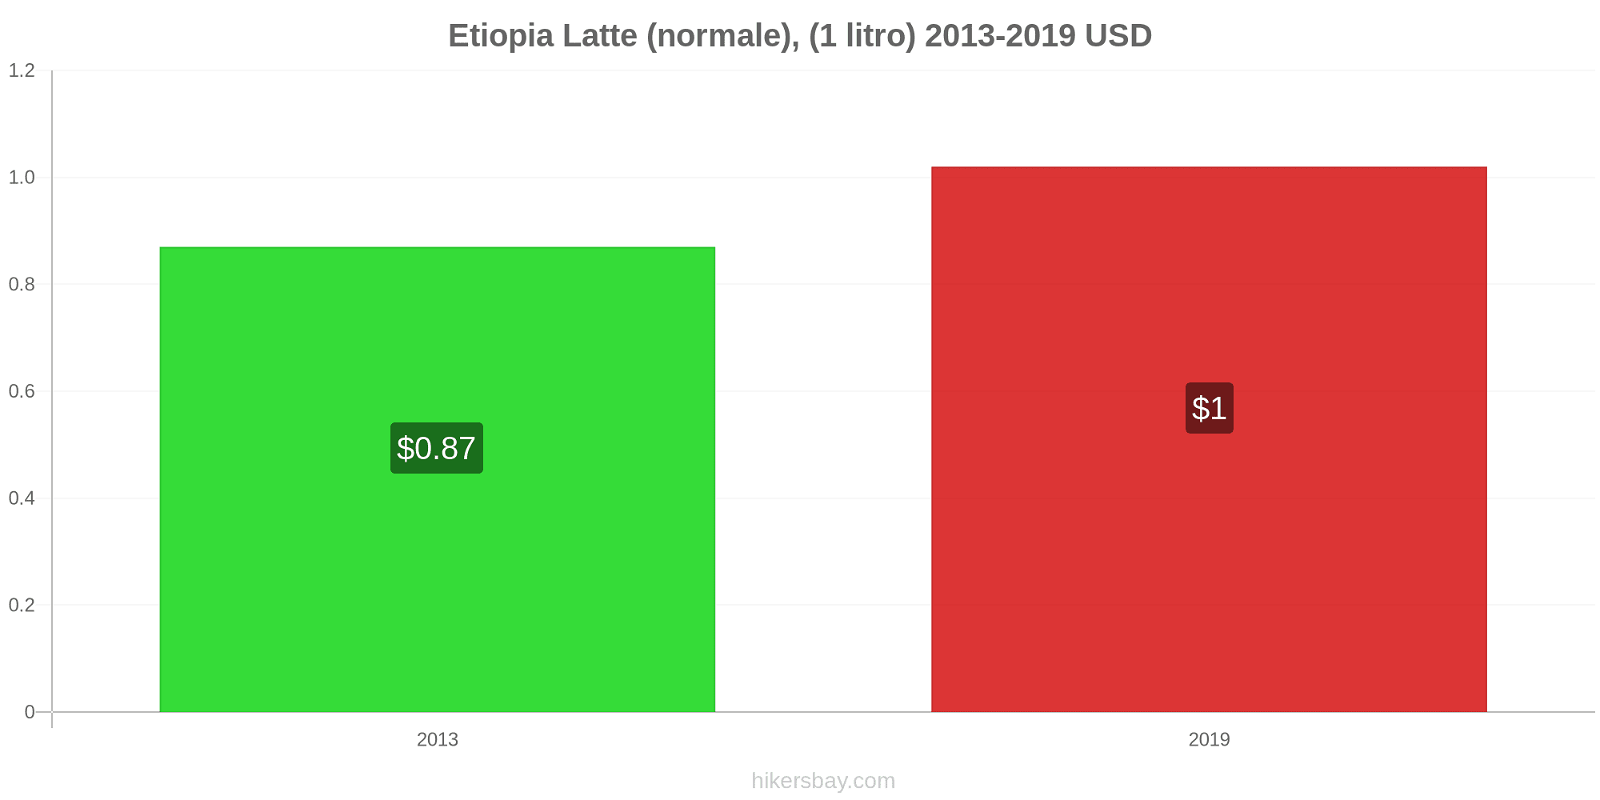 Etiopia variazioni di prezzo Latte (1 litro) hikersbay.com